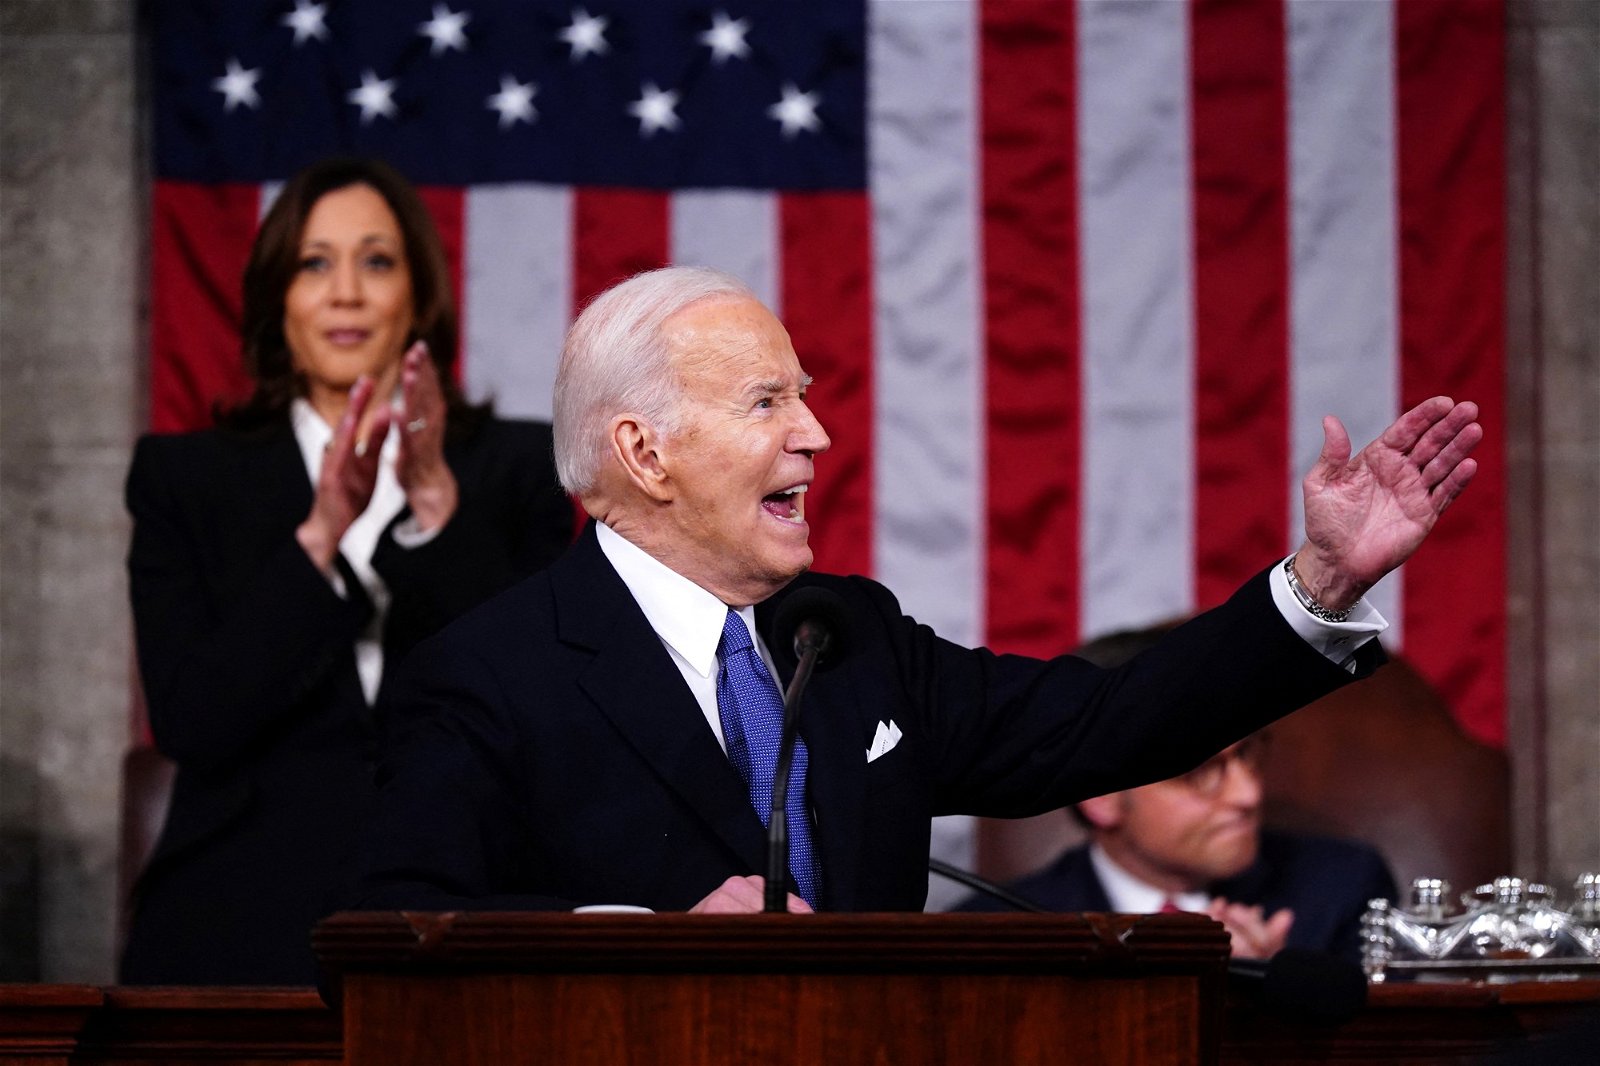 Joe Biden holds one hand out as Kamala Harris claps behind him, a US flag on the wall